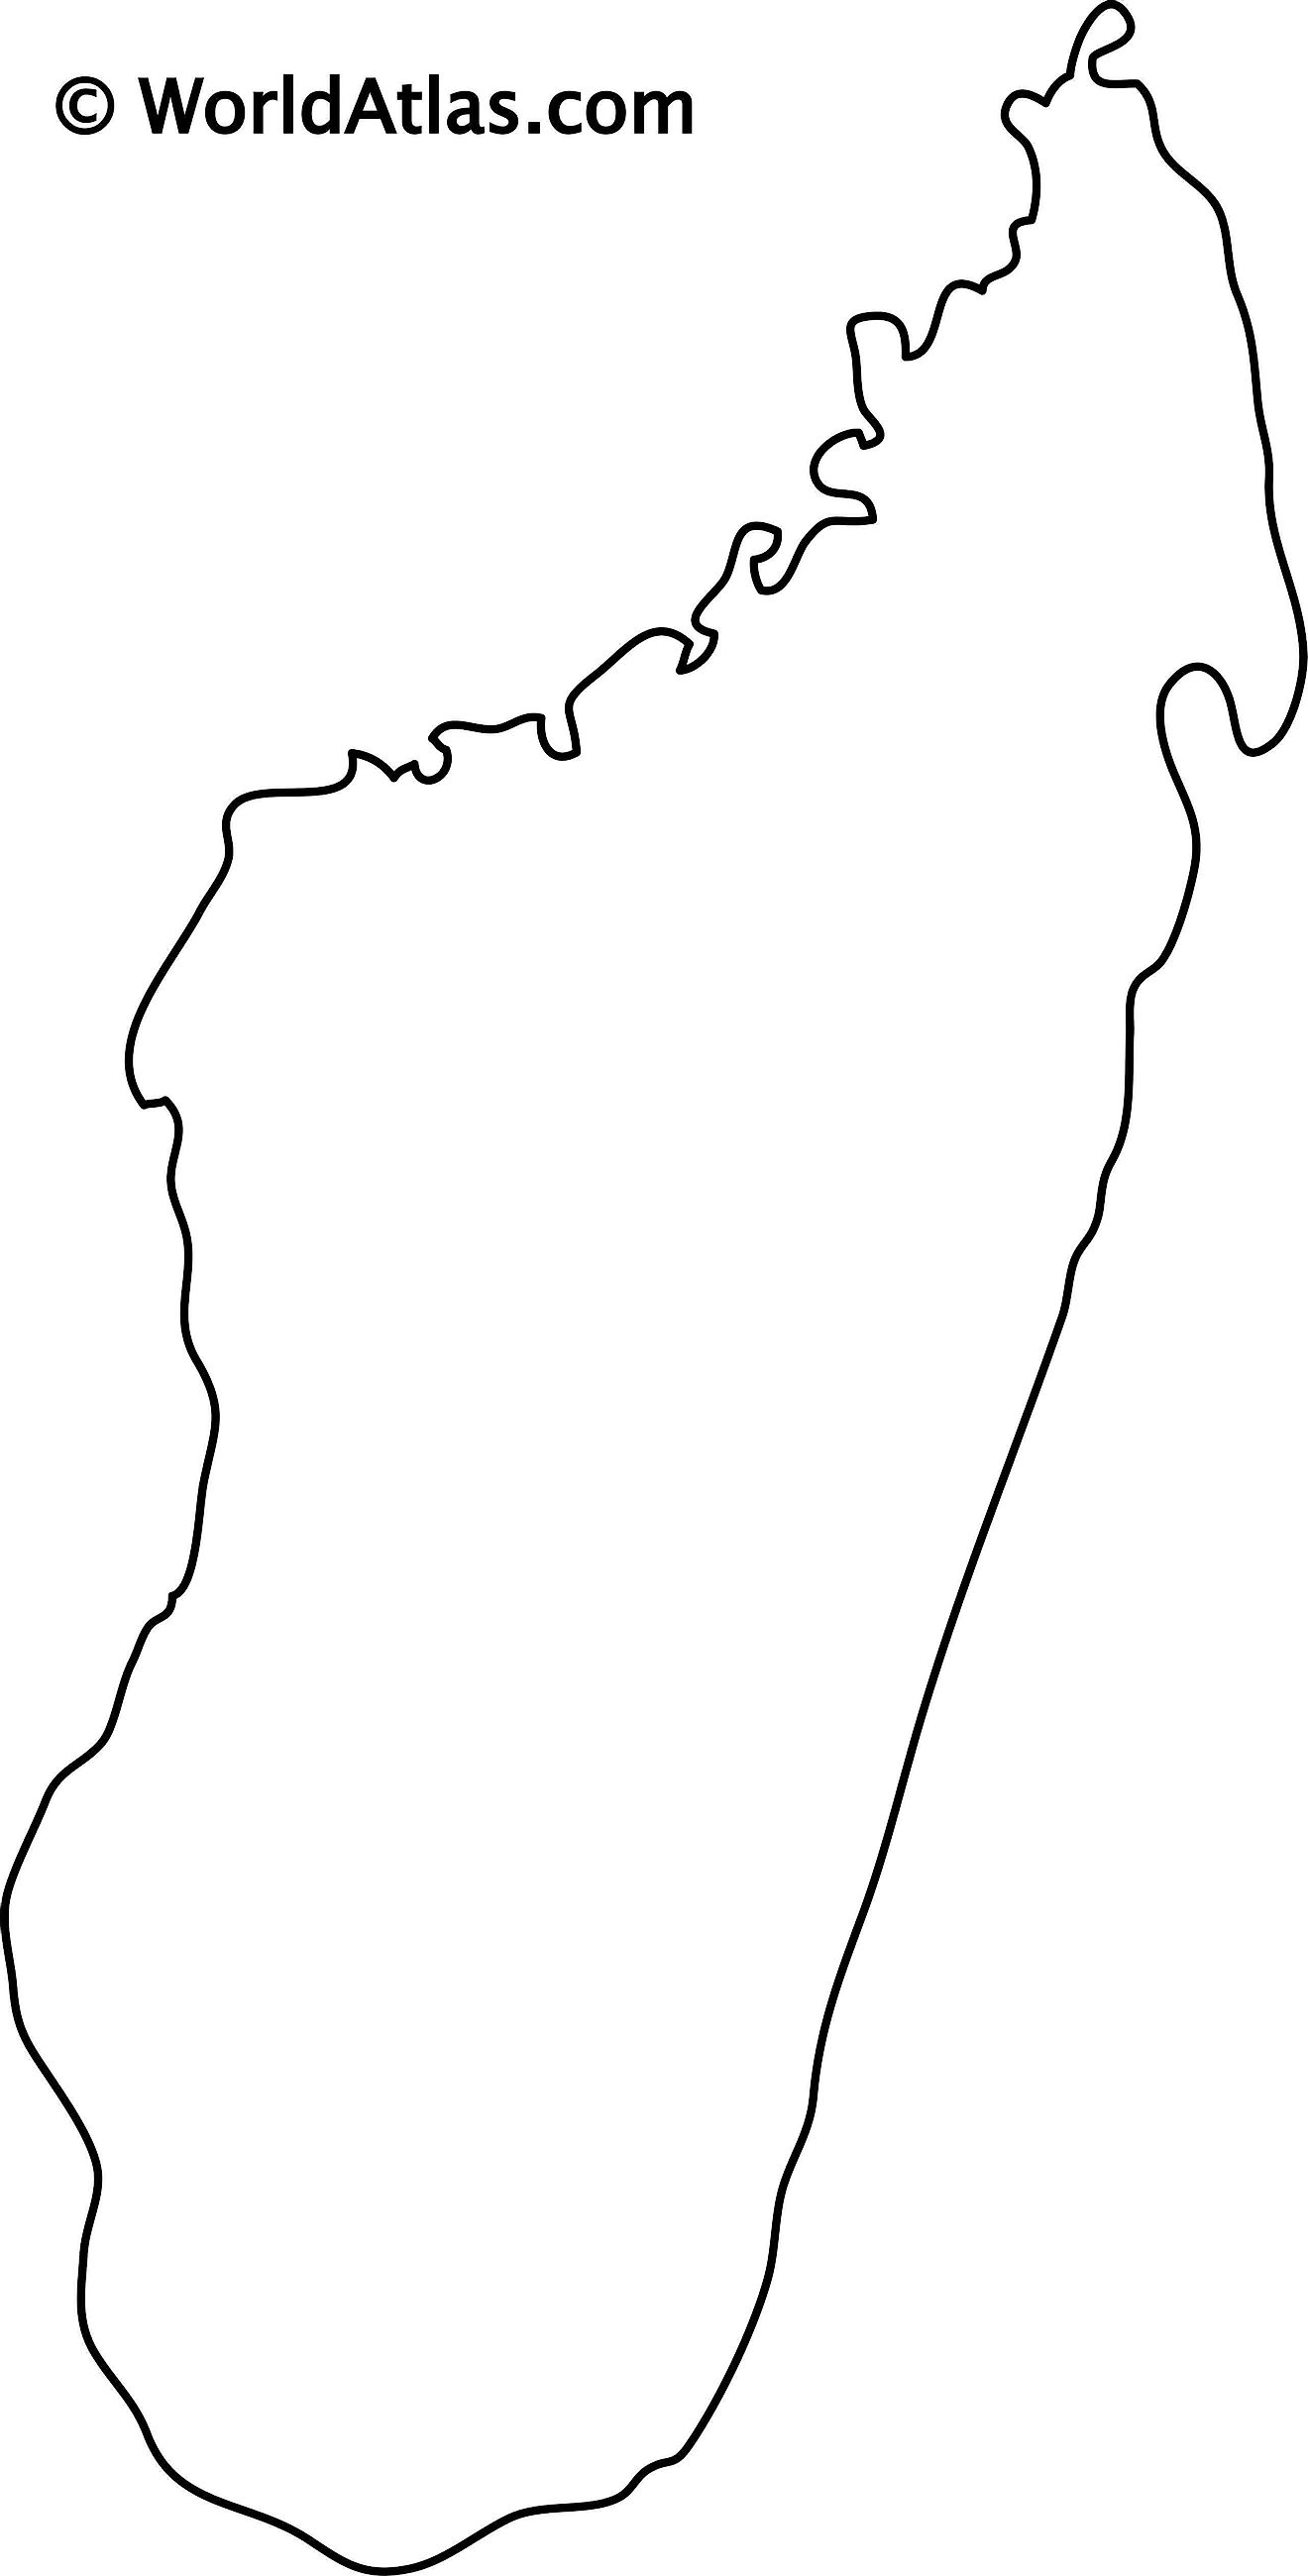 Blank Outline Map of Madagascar